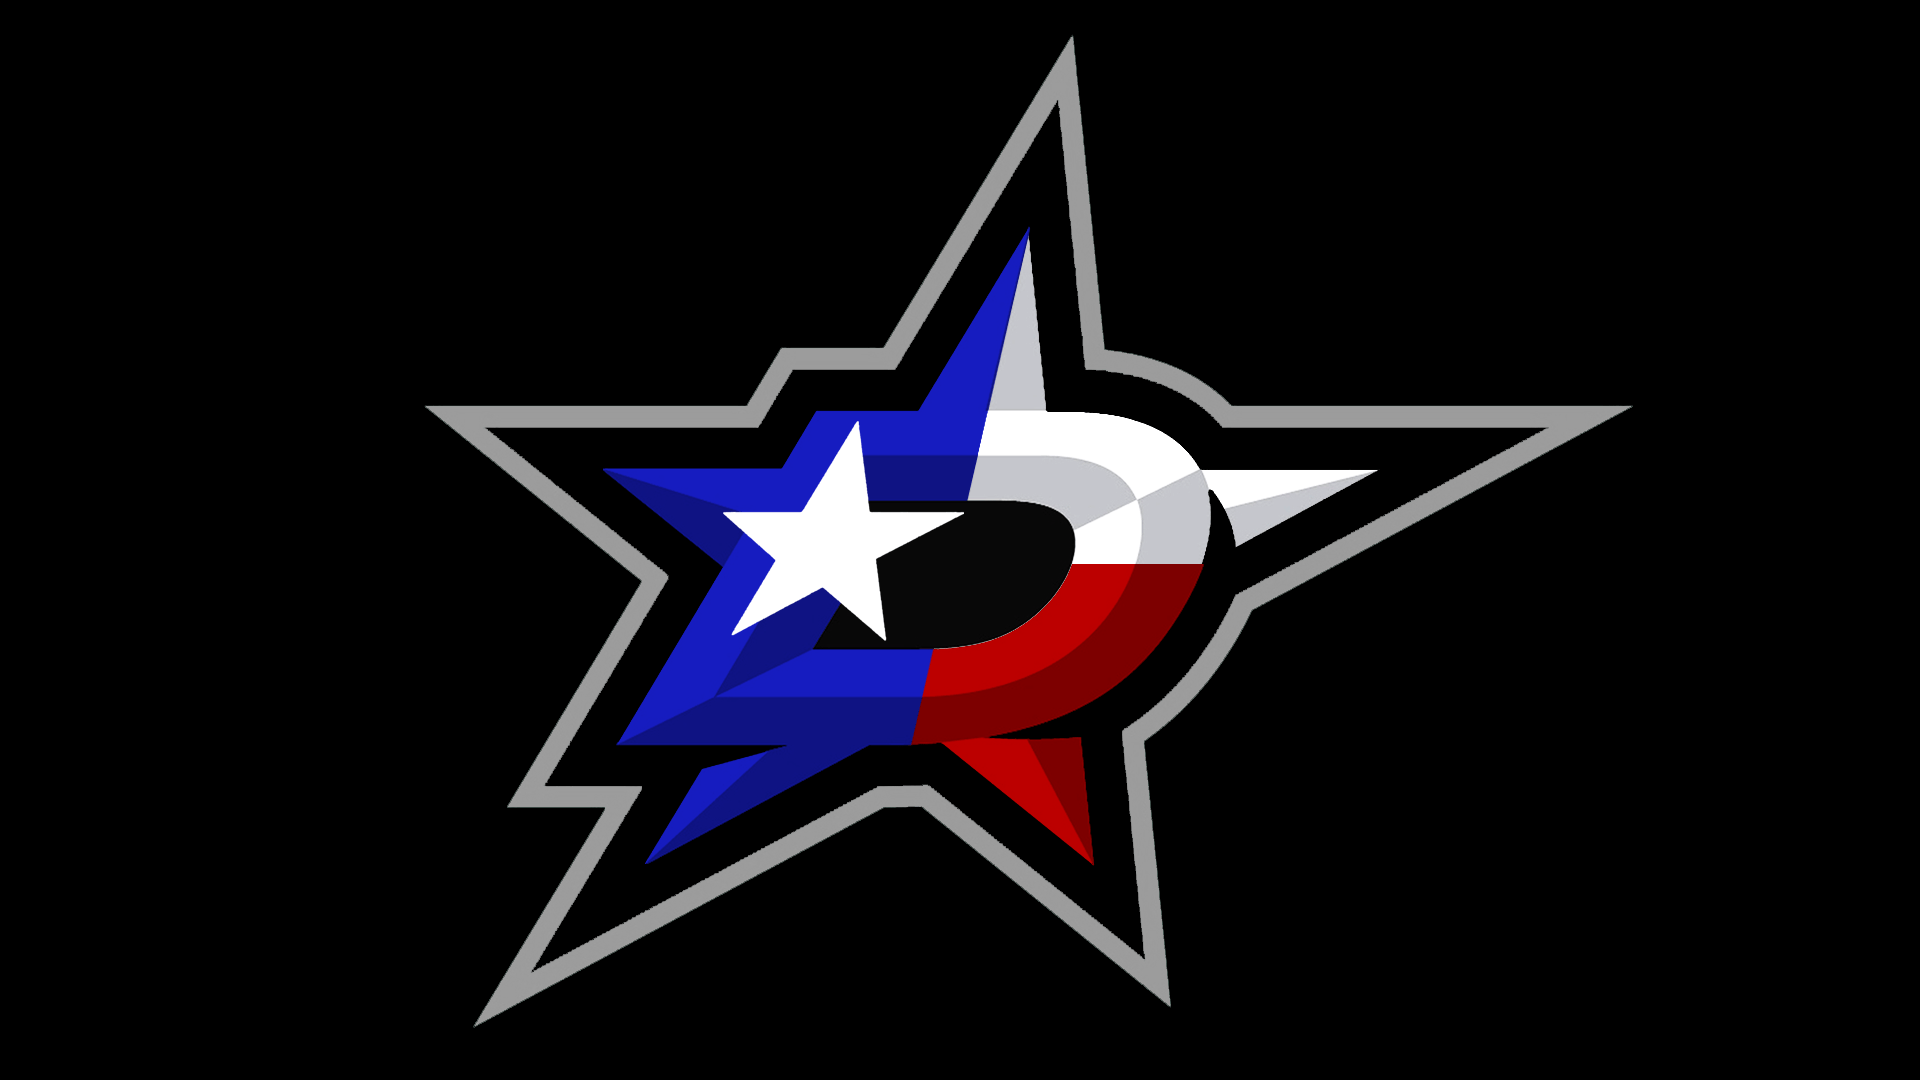 Blue Flag with Stars Logo - Dallas Stars logo concept made by /r/hockey redditor : DallasStars